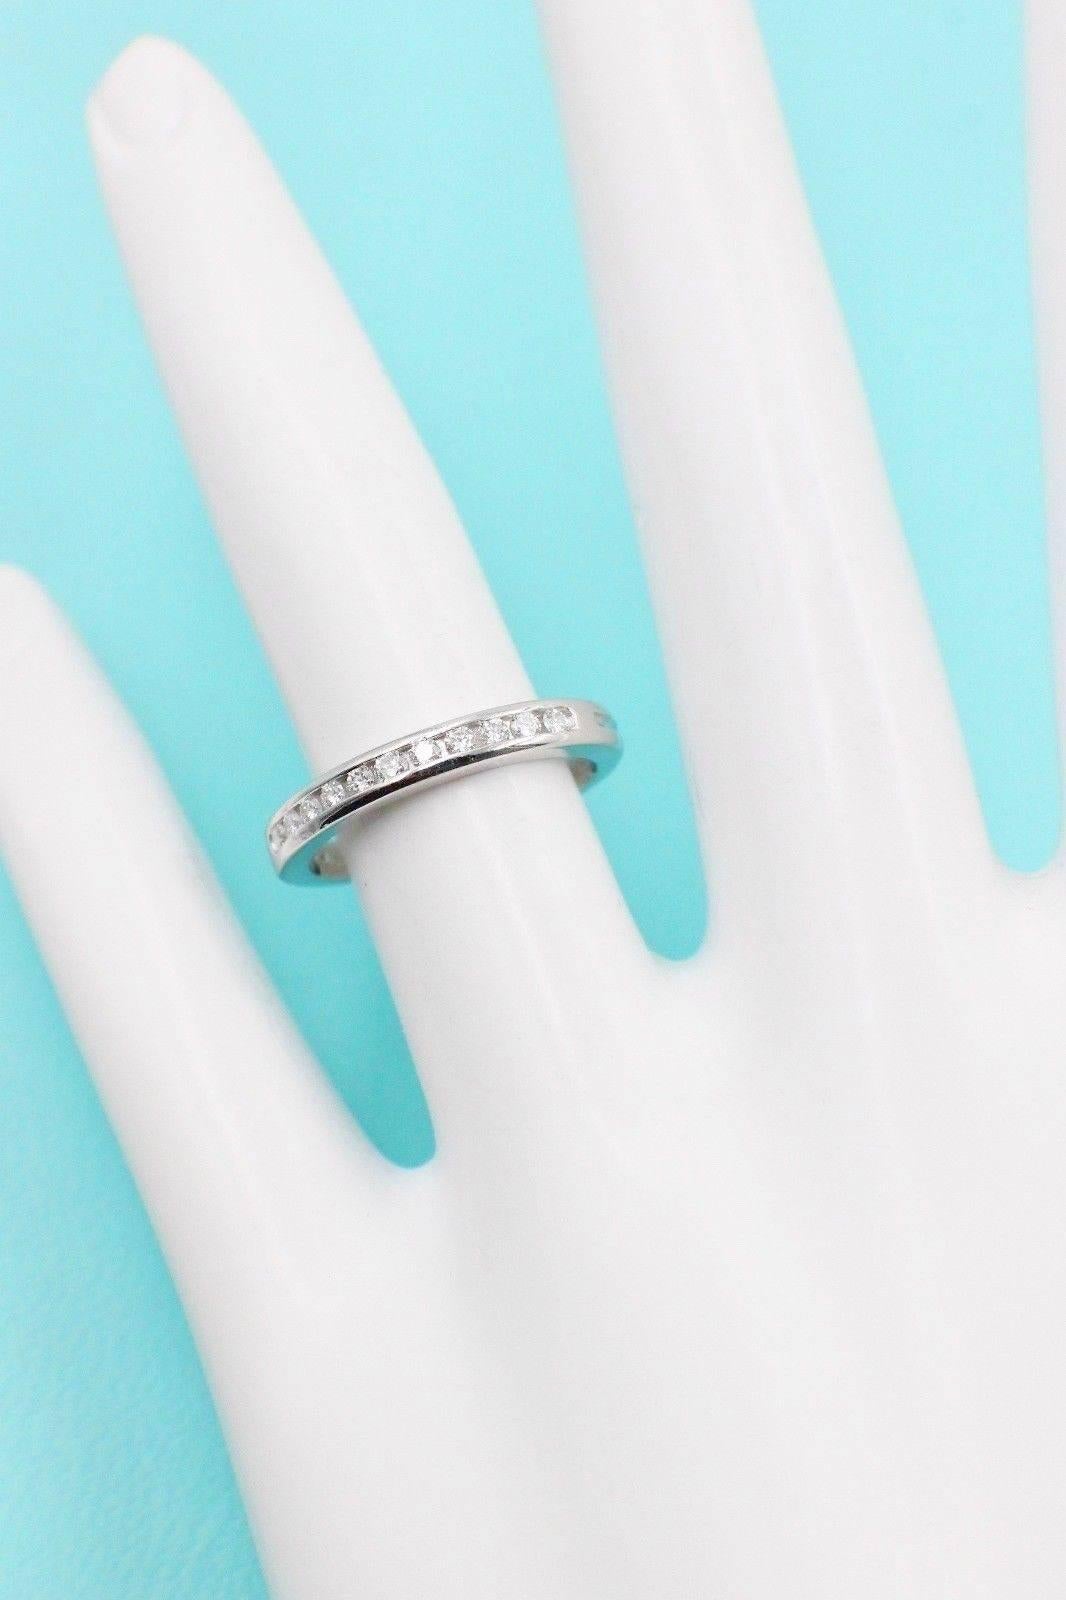 Tiffany & Co.
Style: Half Circle Diamond Wedding Band
Sku Number:  18408929
Size:  4 - sizable
Metal:  Platinum PT950
Total Carat Weight:  0.22 Cts.
Diamond Shape:  Round Brilliant 
Diamond Color & Clarity:  G  VVS
Hallmark:  